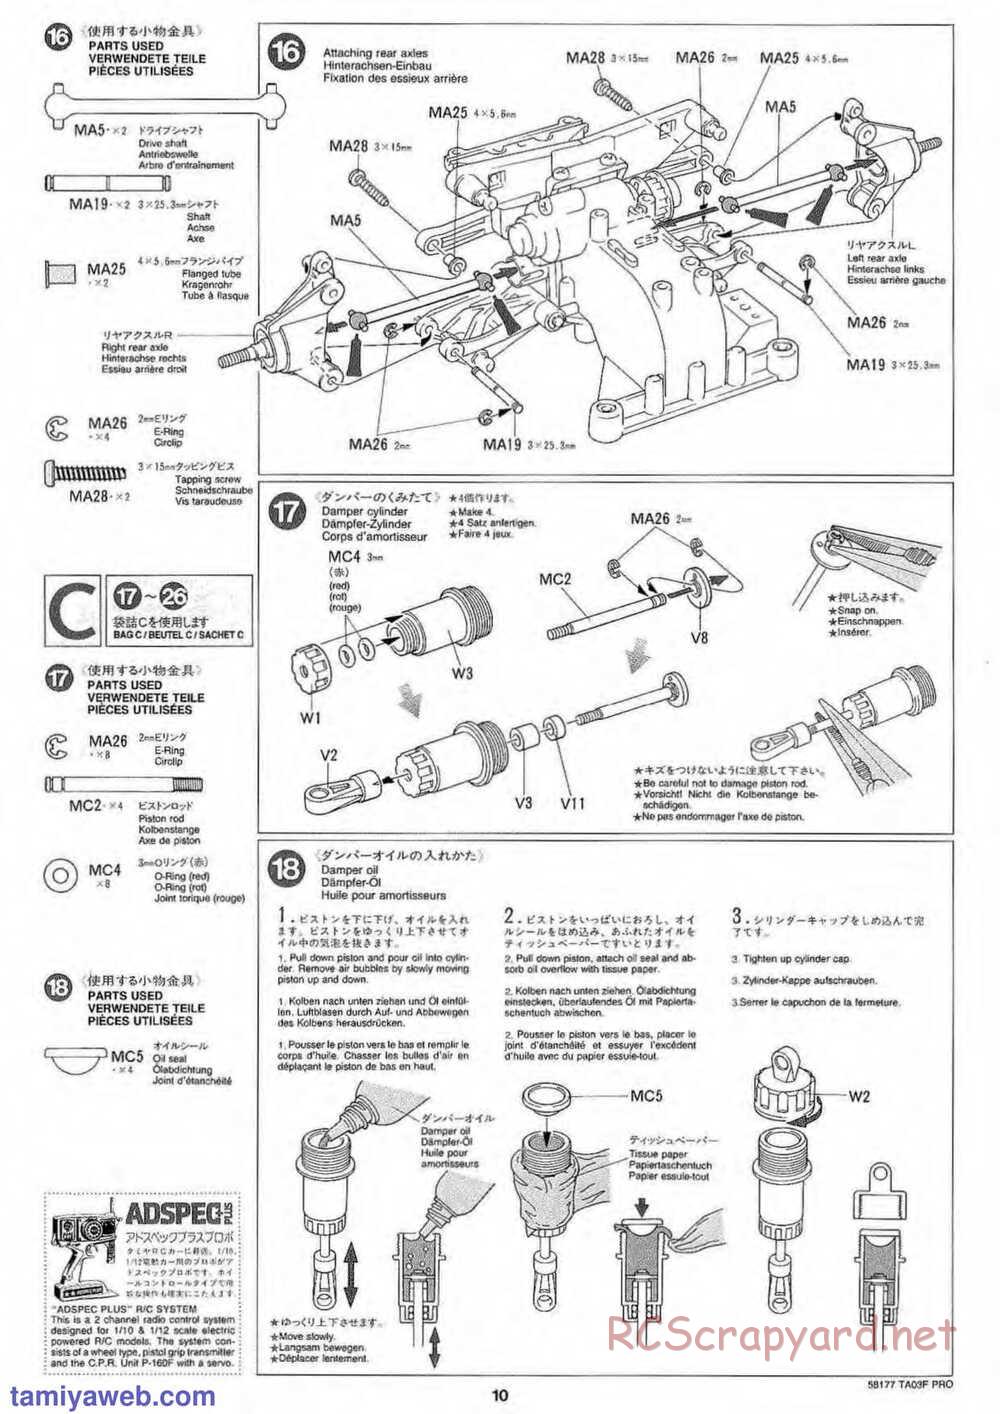 Tamiya - TA-03F Pro Chassis - Manual - Page 10